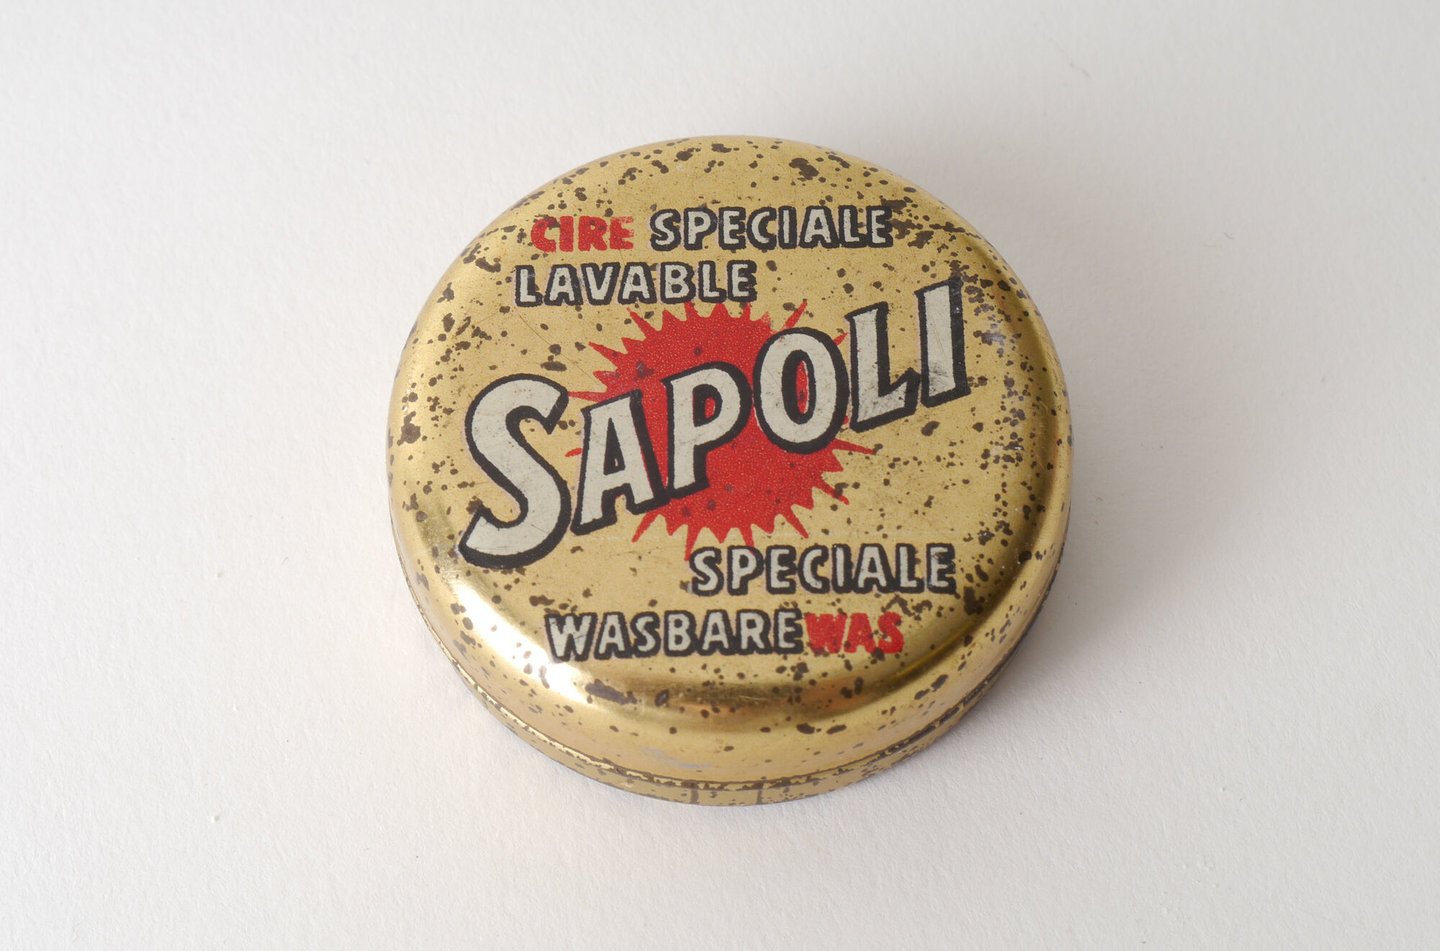 Klein blikje met boenwas van het merk Sapoli